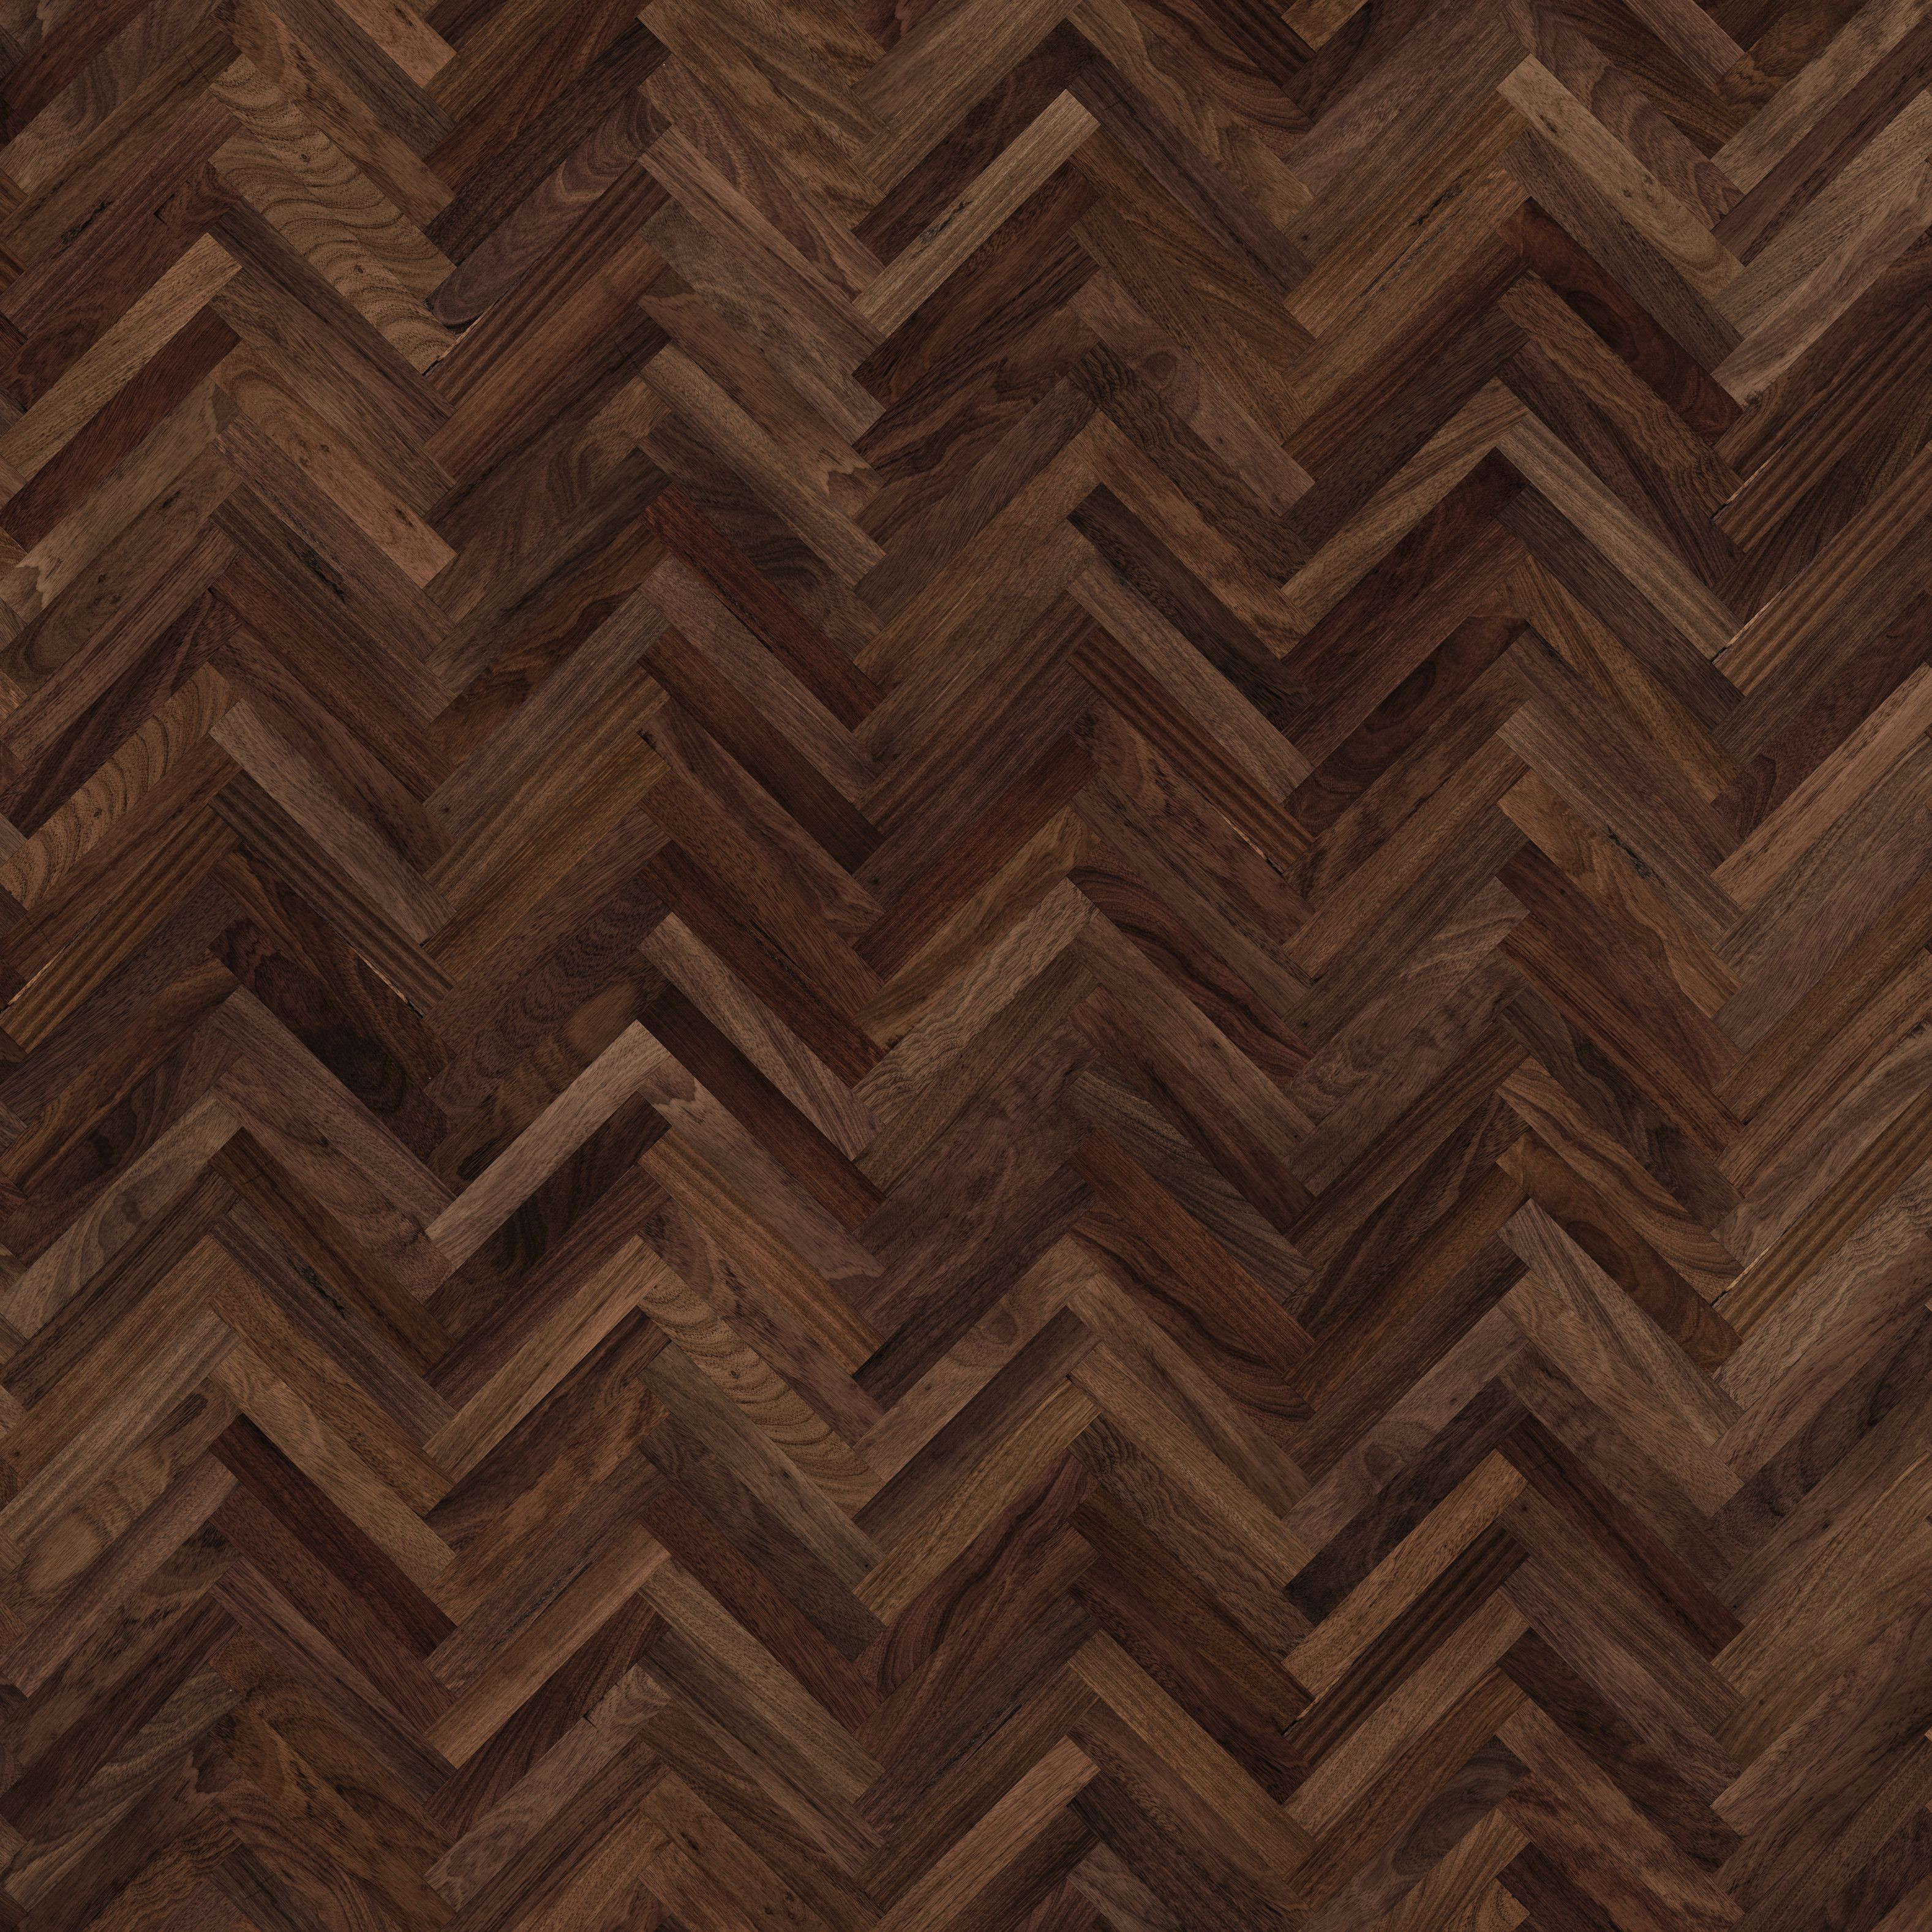 black walnut hardwood flooring of parquet wood flooring for dark brown wood background xxxl 171110782 587c06b75f9b584db316fb21